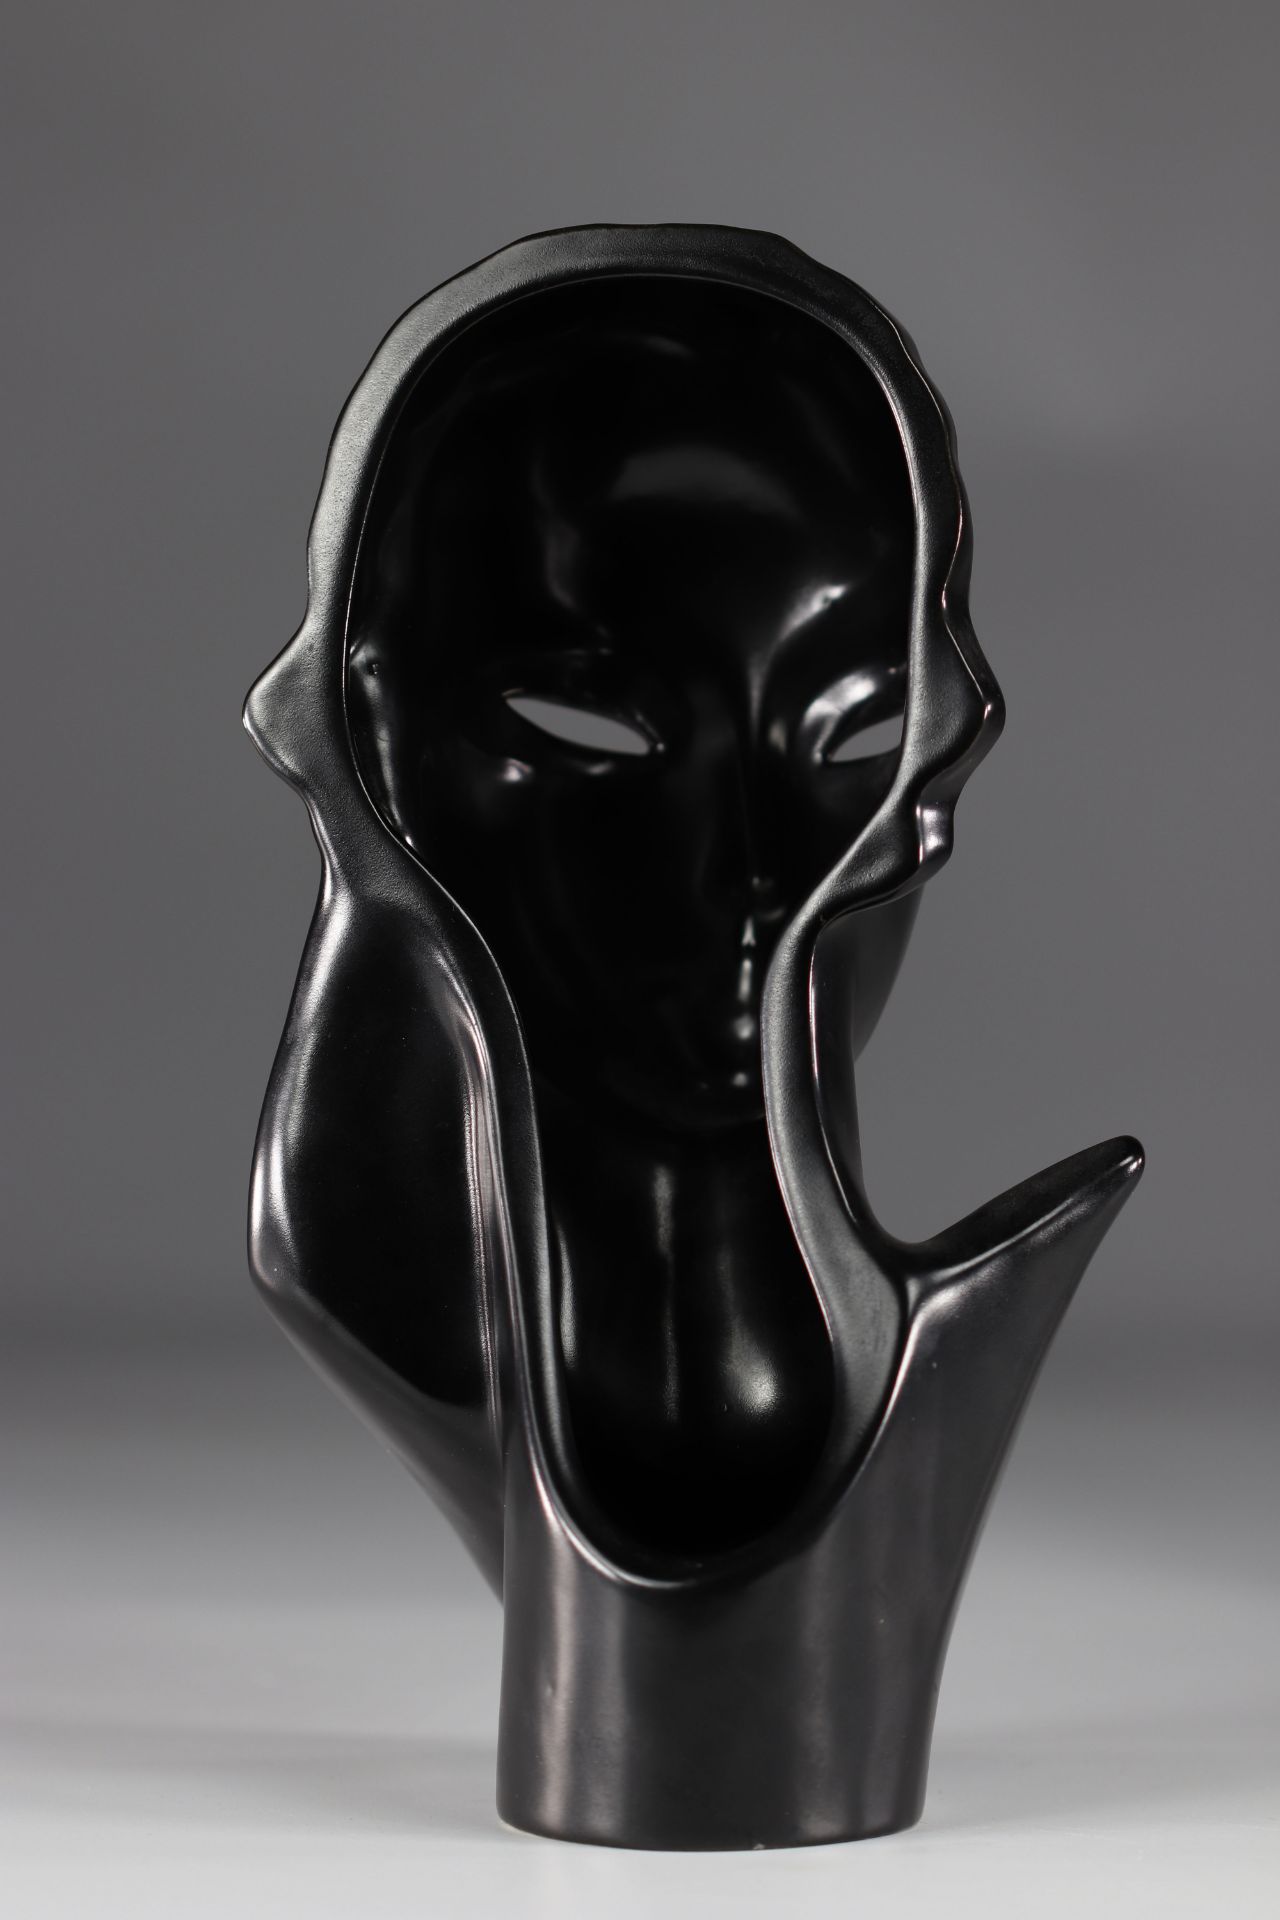 Villeroy & Boch Septfontaines mask "Eve" by Edouard Hermanutz 1930/1940 - Image 5 of 6